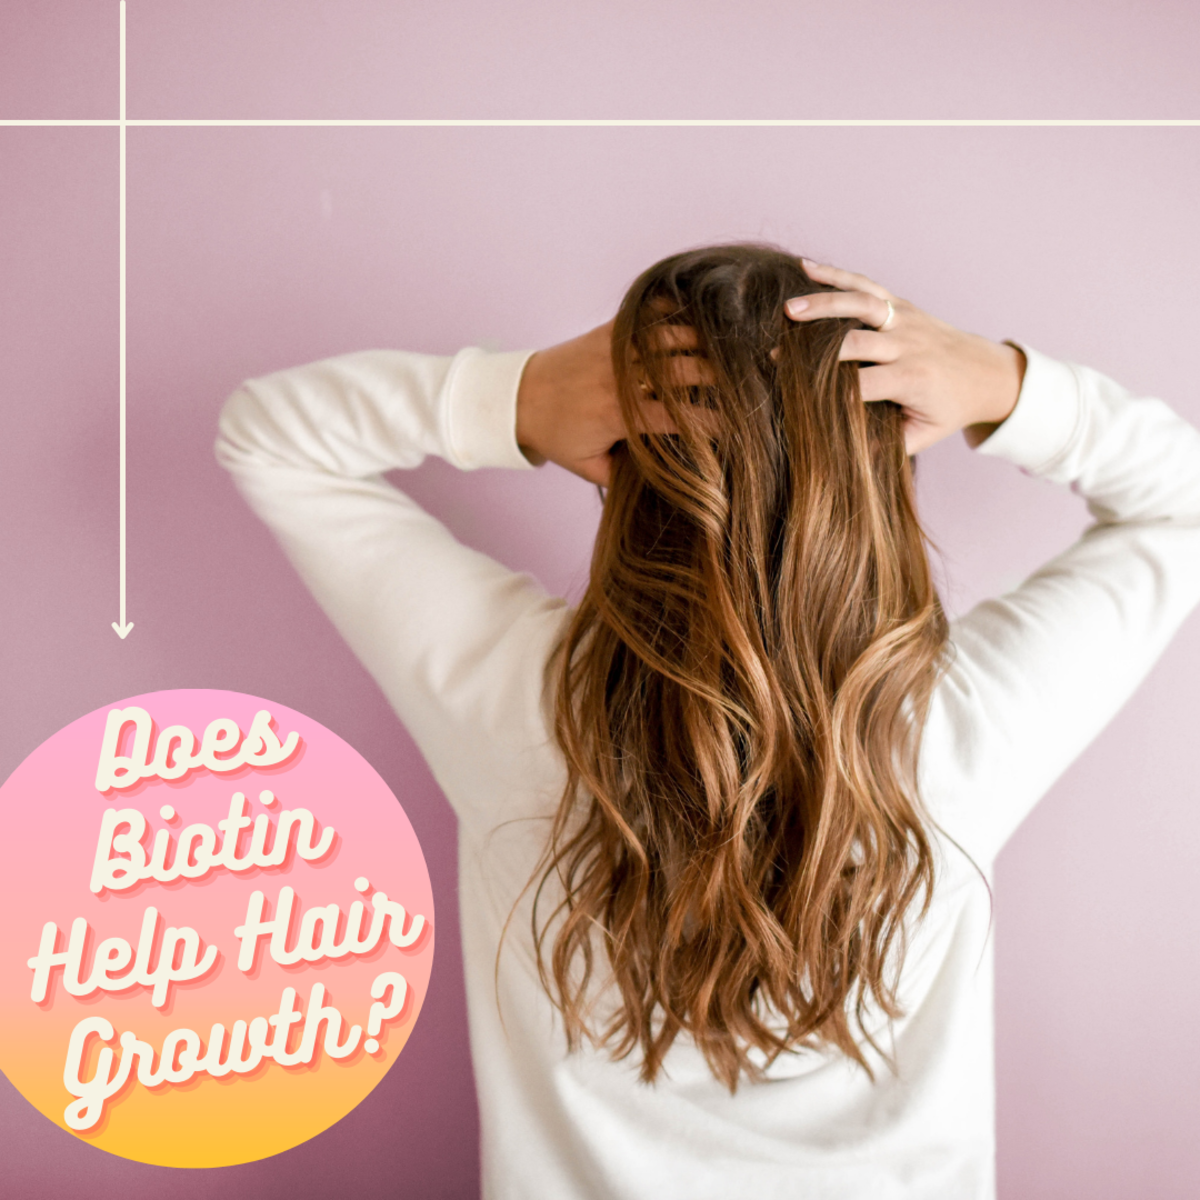 Does biotin really help hair growth?